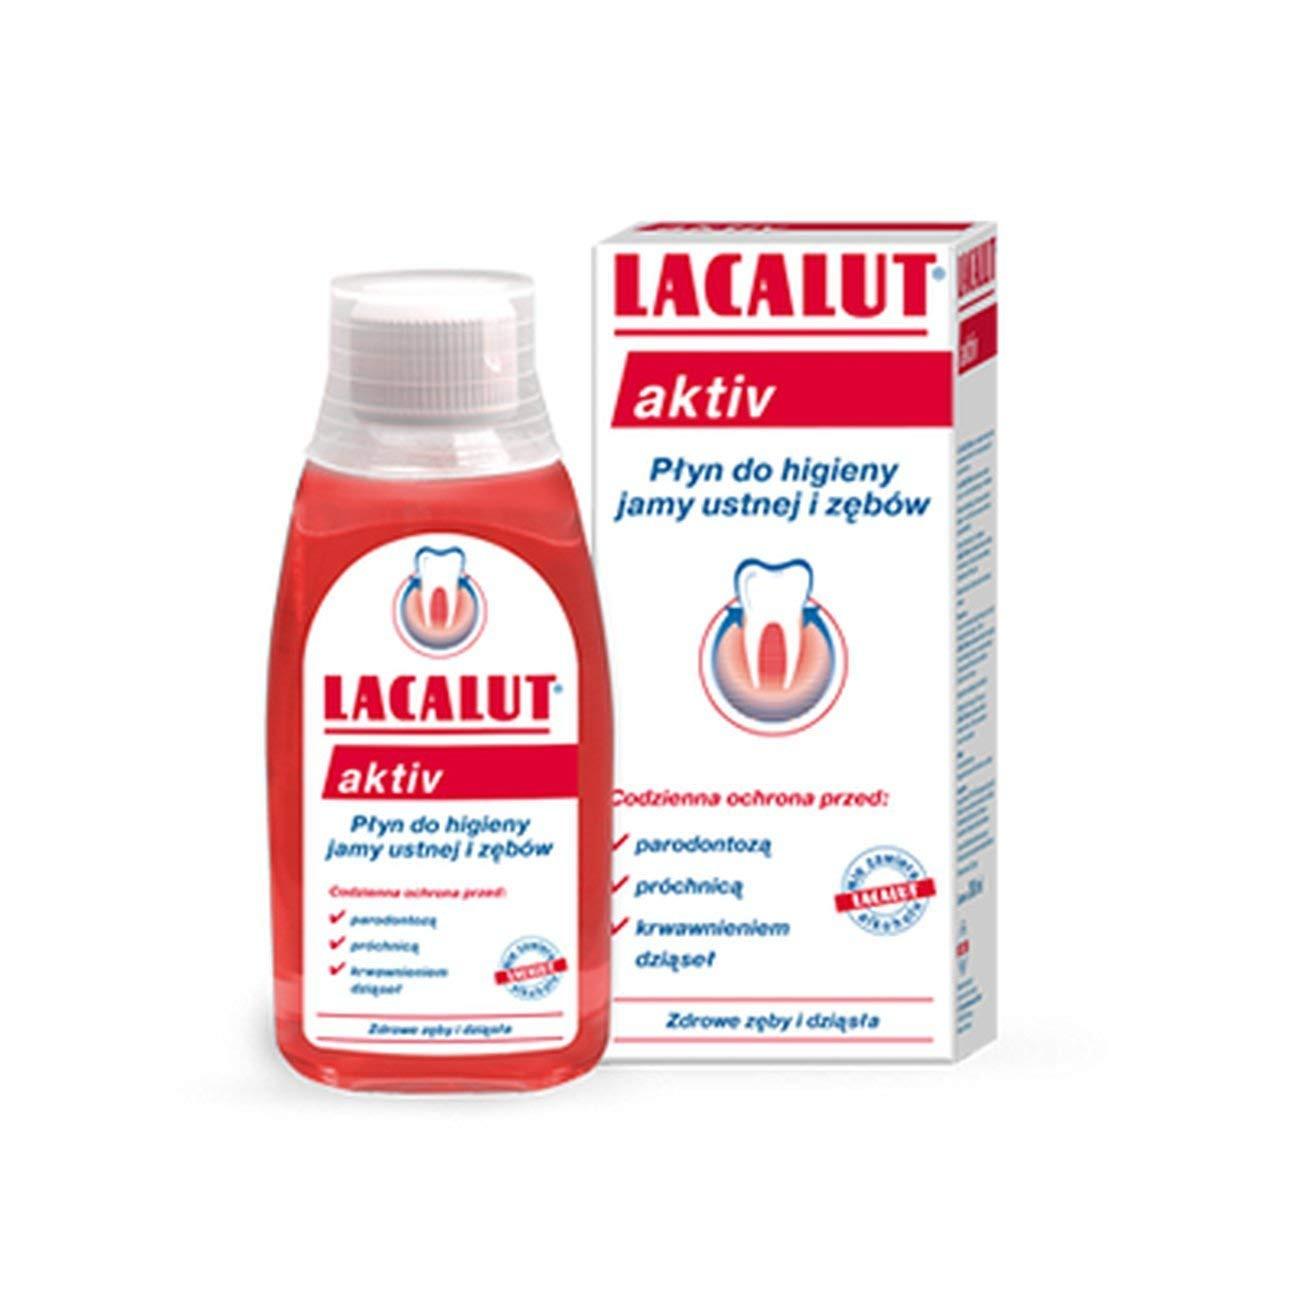 waterbestendig chef strottenhoofd LACALUT® active mouthwash solution - Uniminds